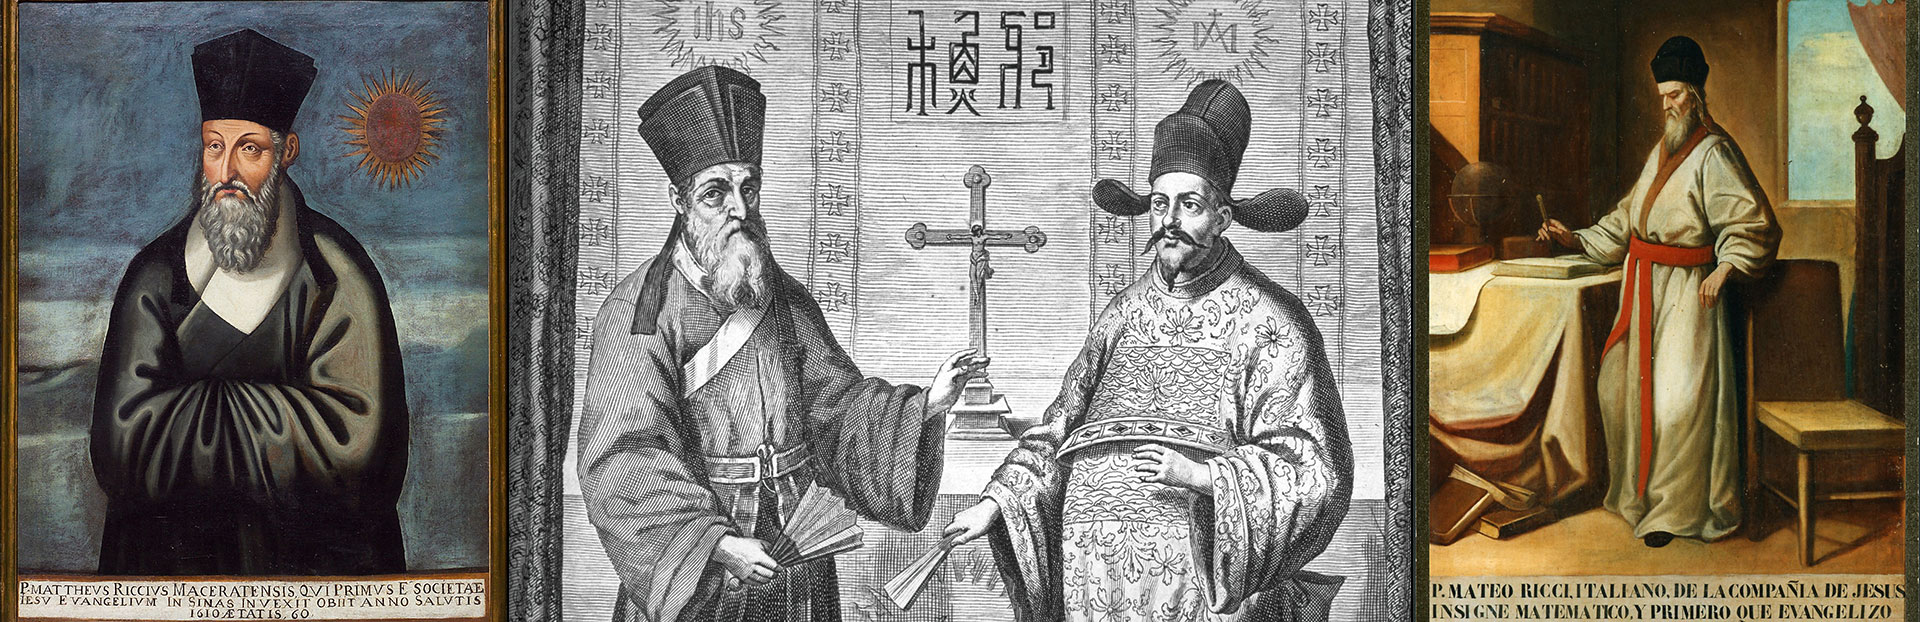 Matteo Ricci, missionary of inculturation